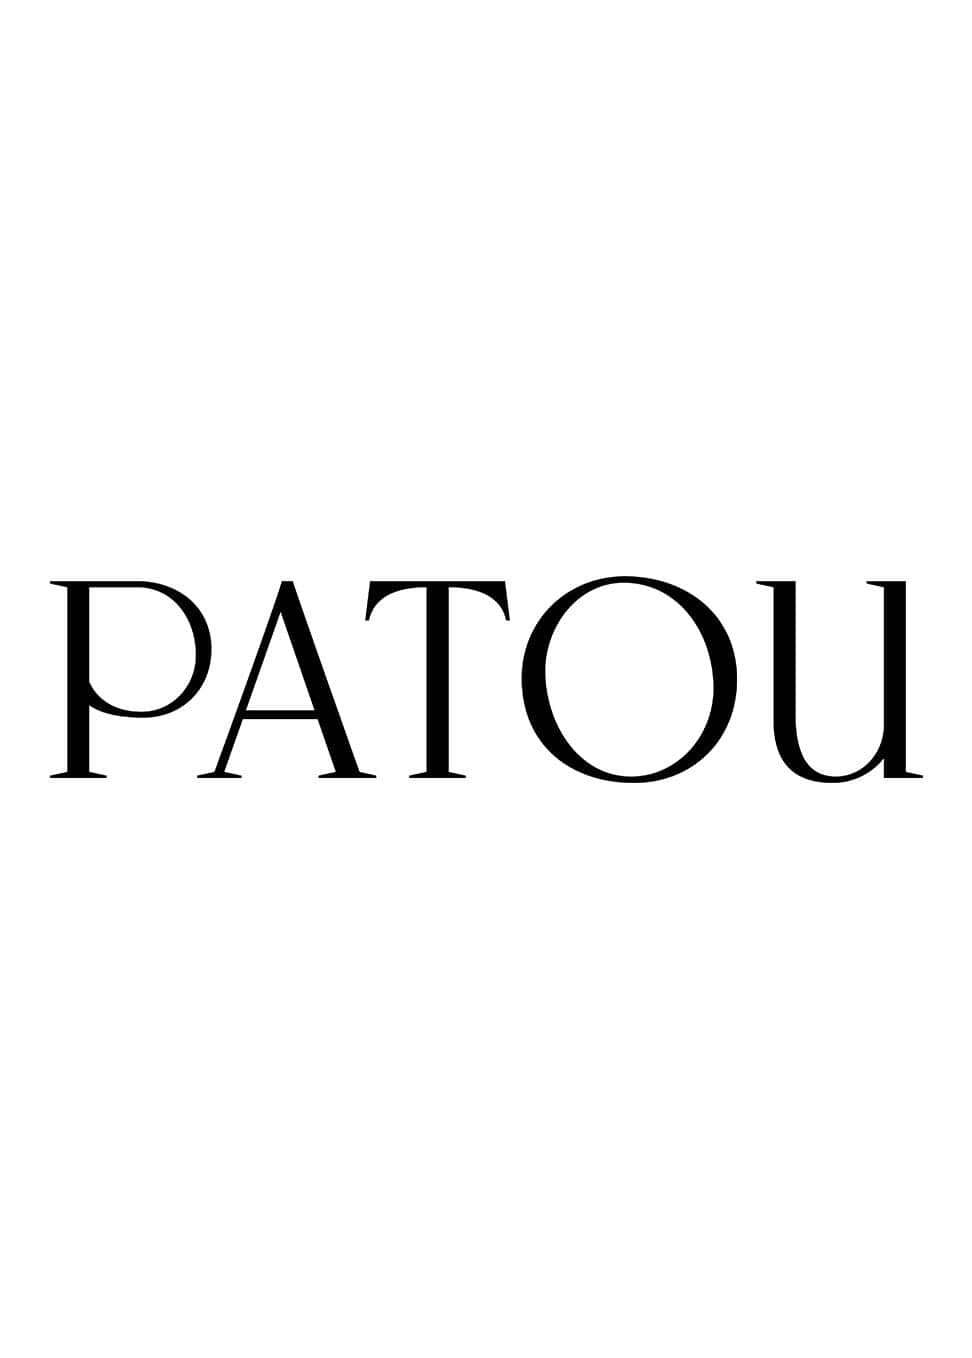 Download Patou Wordmark For Desktop Wallpaper | Wallpapers.com